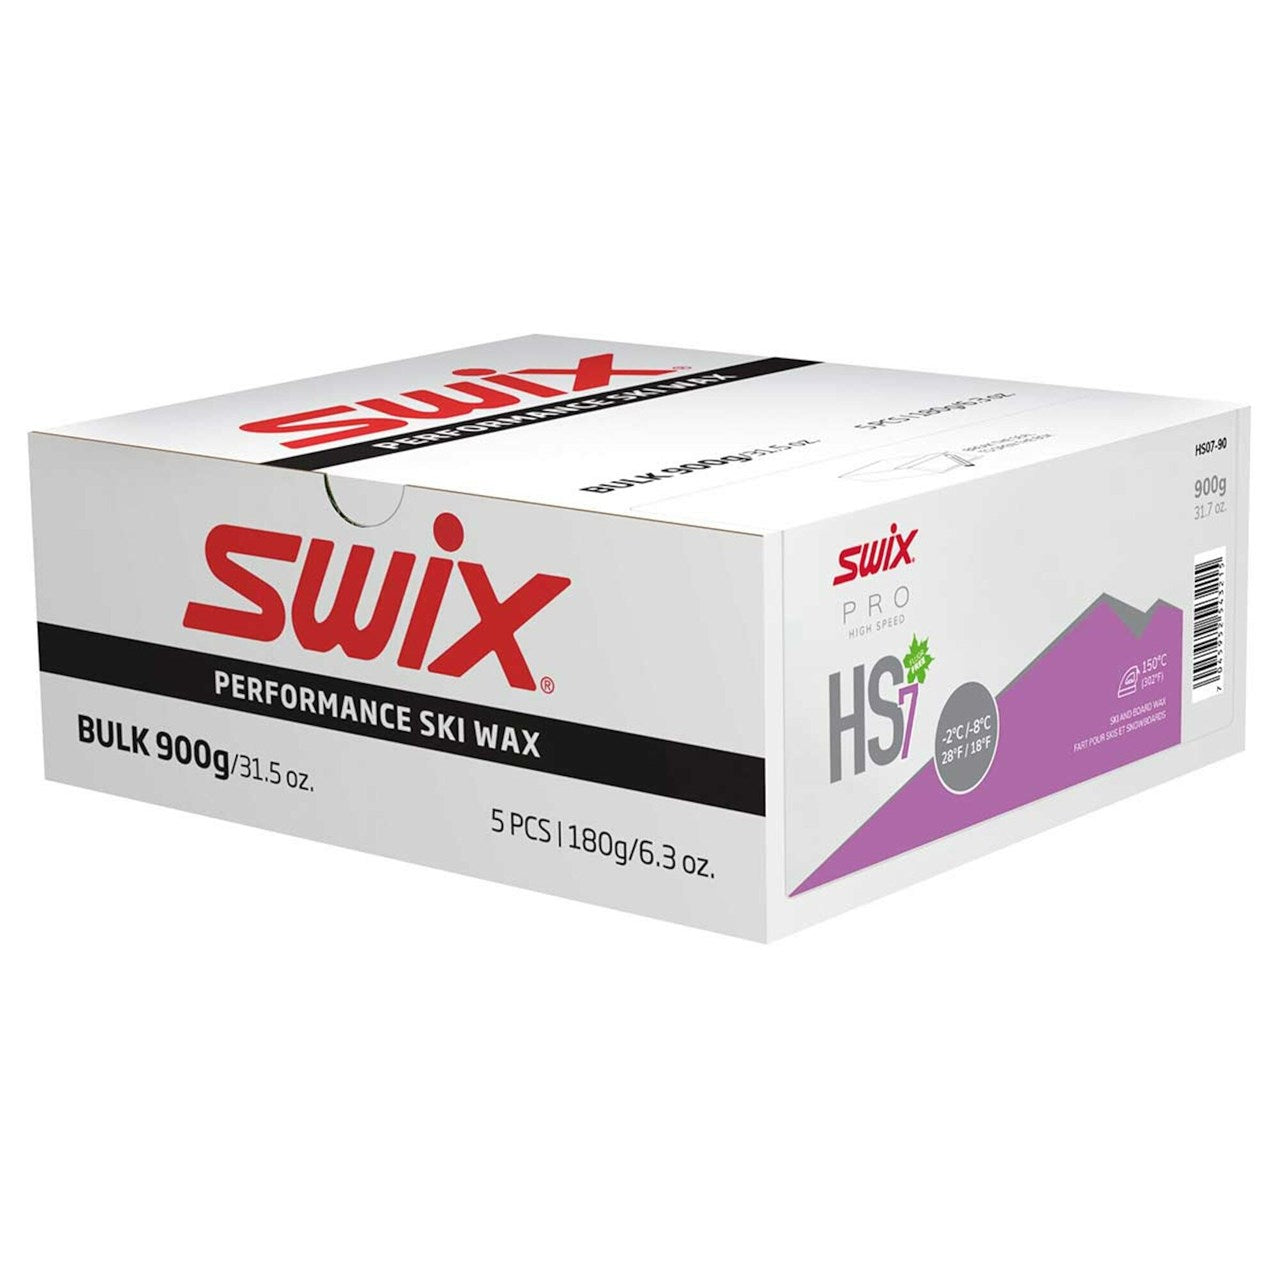 Swix HS7 Glide Wax 900g Bulk